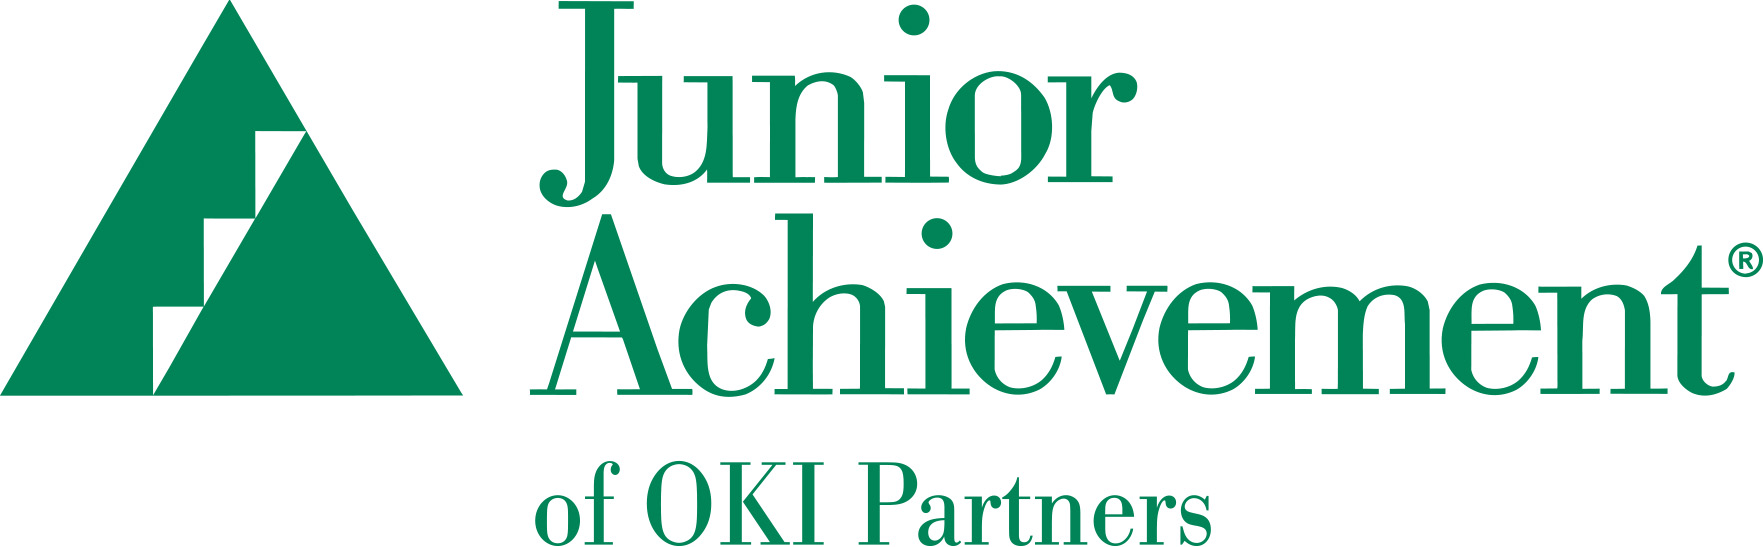 Junior Achievement of OKI Partners, Inc. logo